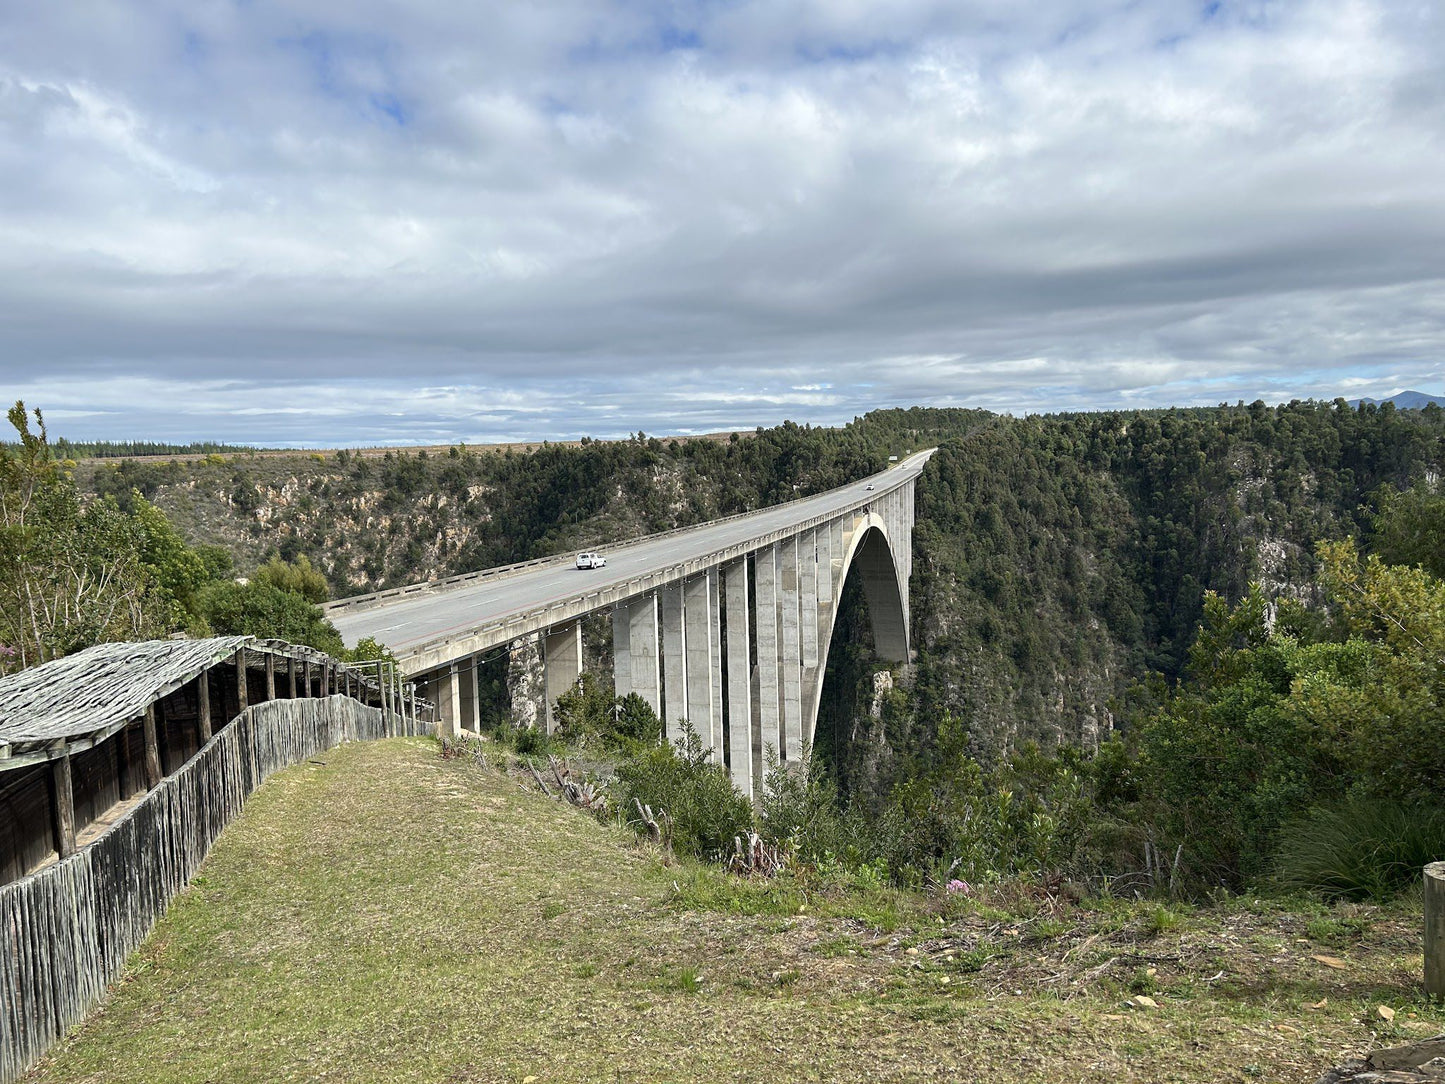  Bloukrans Bridge